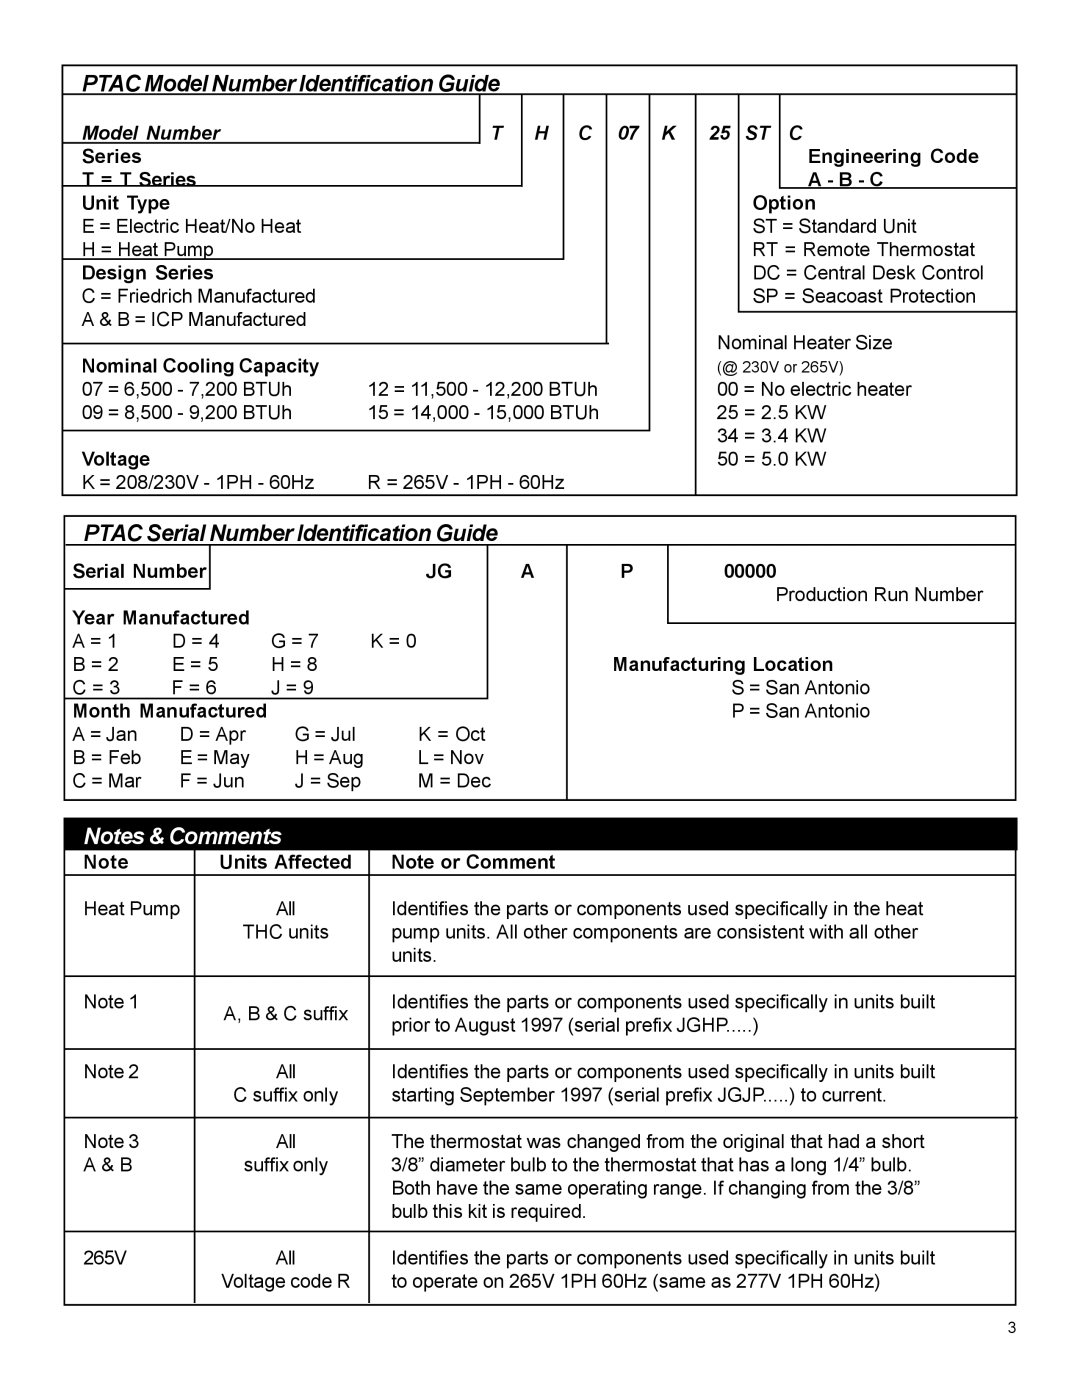 Friedrich WMPTAC02 manual PTAC Model Number Identification Guide, PTAC Serial Number Identification Guide, Notes & Comments 